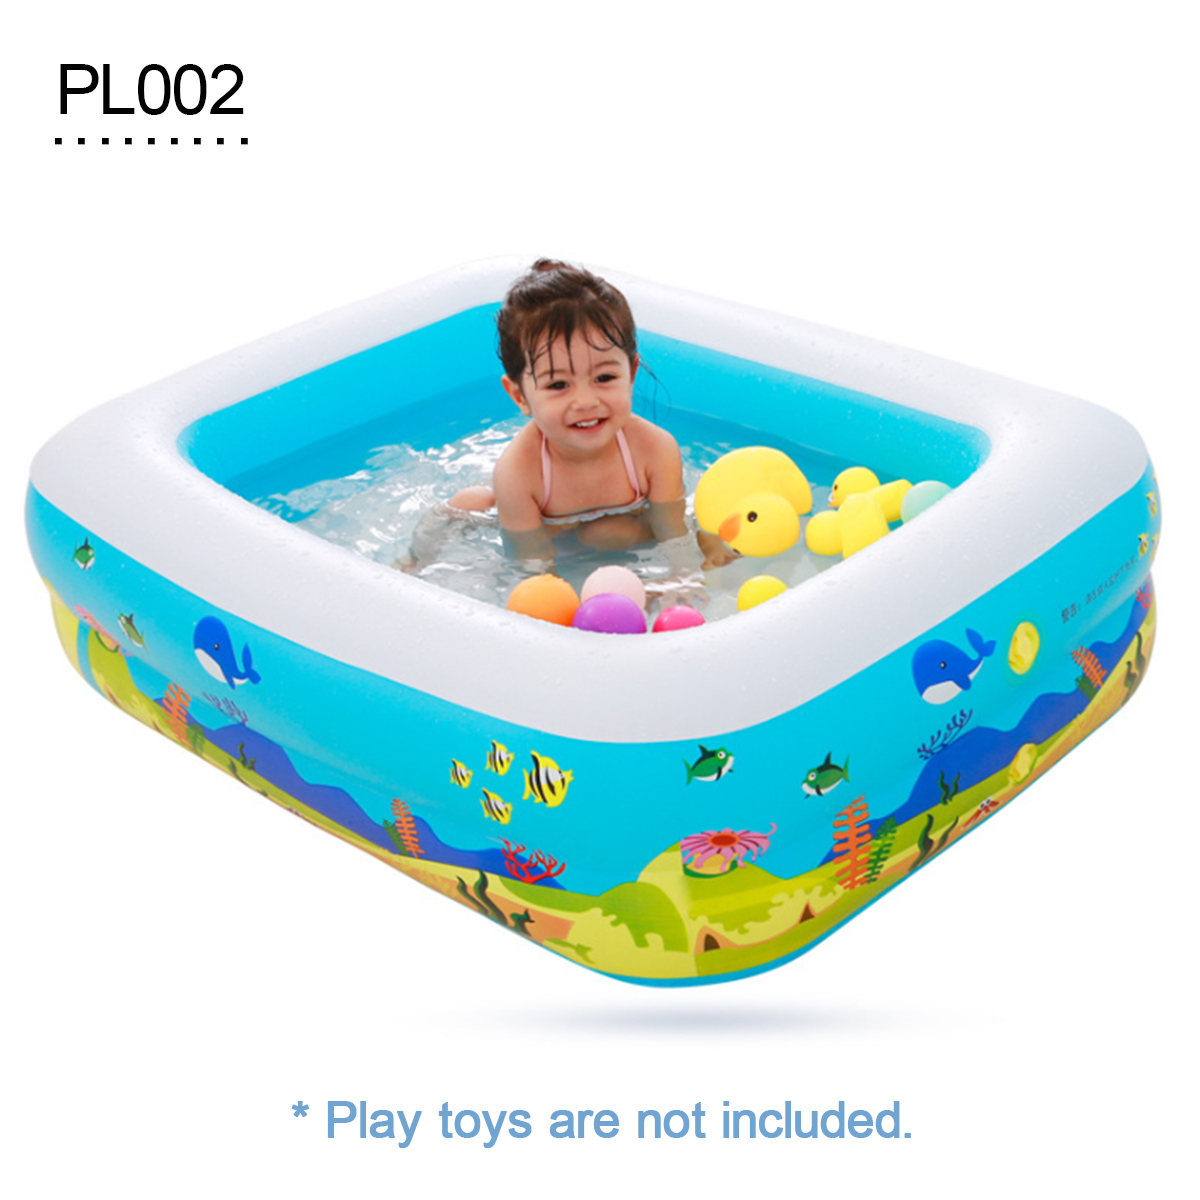 453x338x138-Inflatable-Swimming-Pool-Family-Play-Center-Swim-Baby-Kids-Child-Backyard-Garden-1551978-8